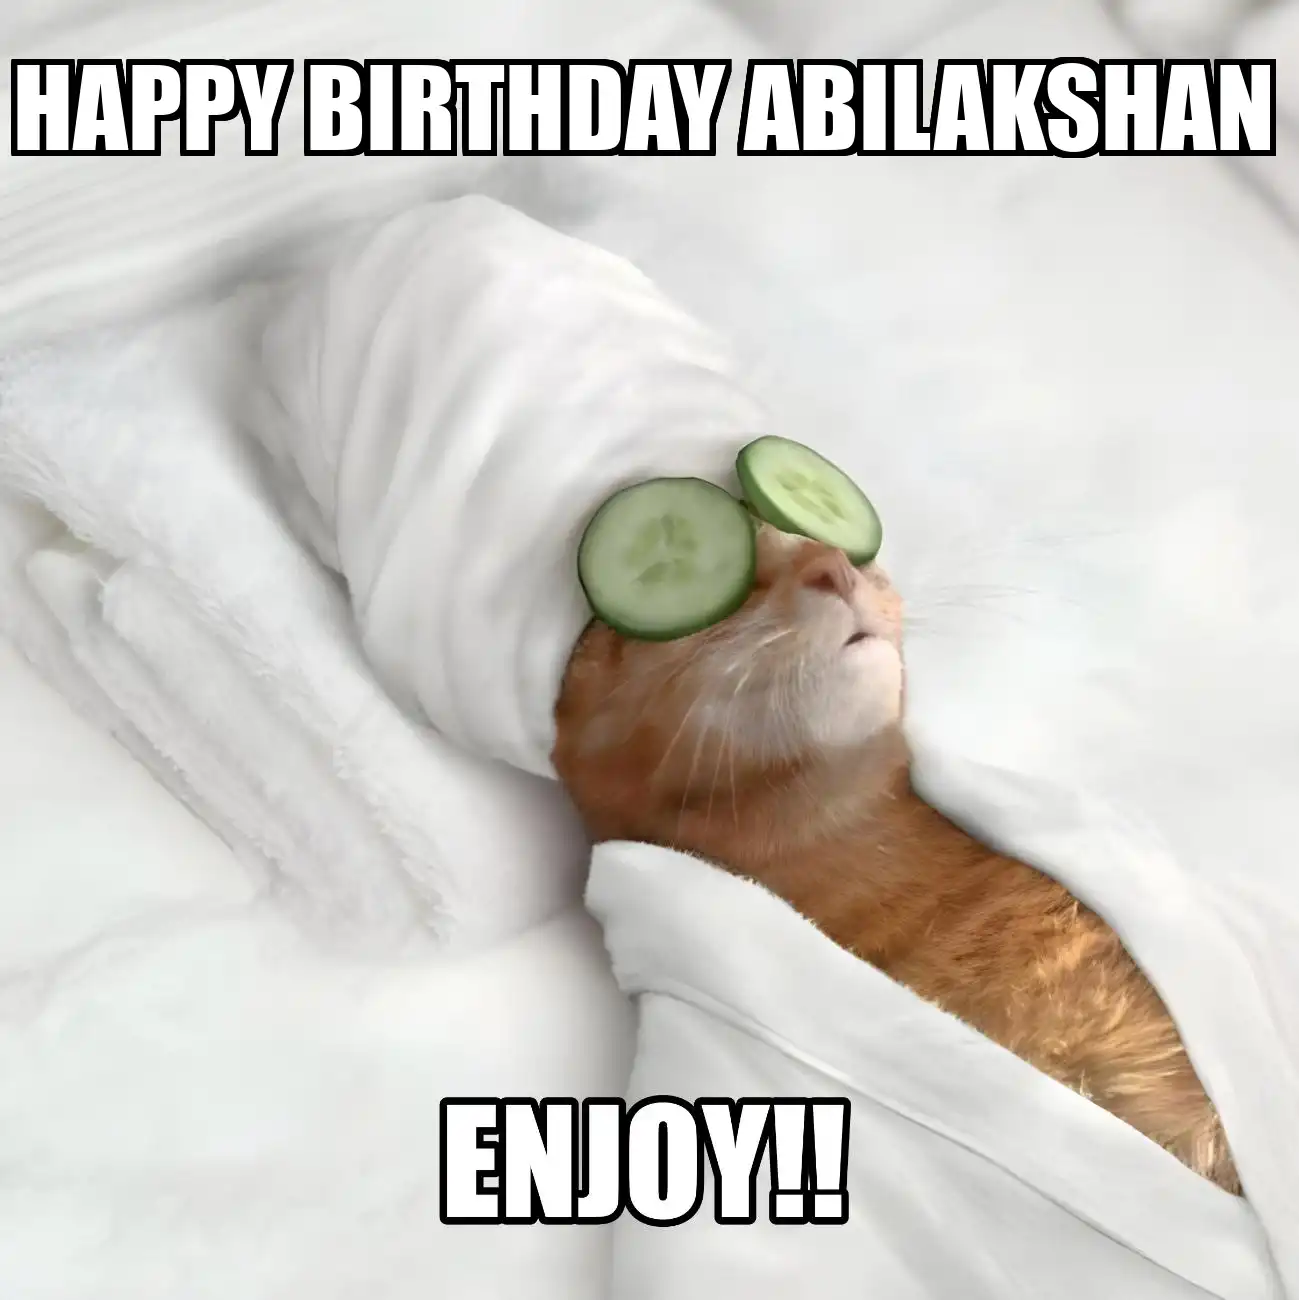 Happy Birthday Abilakshan Enjoy Cat Meme